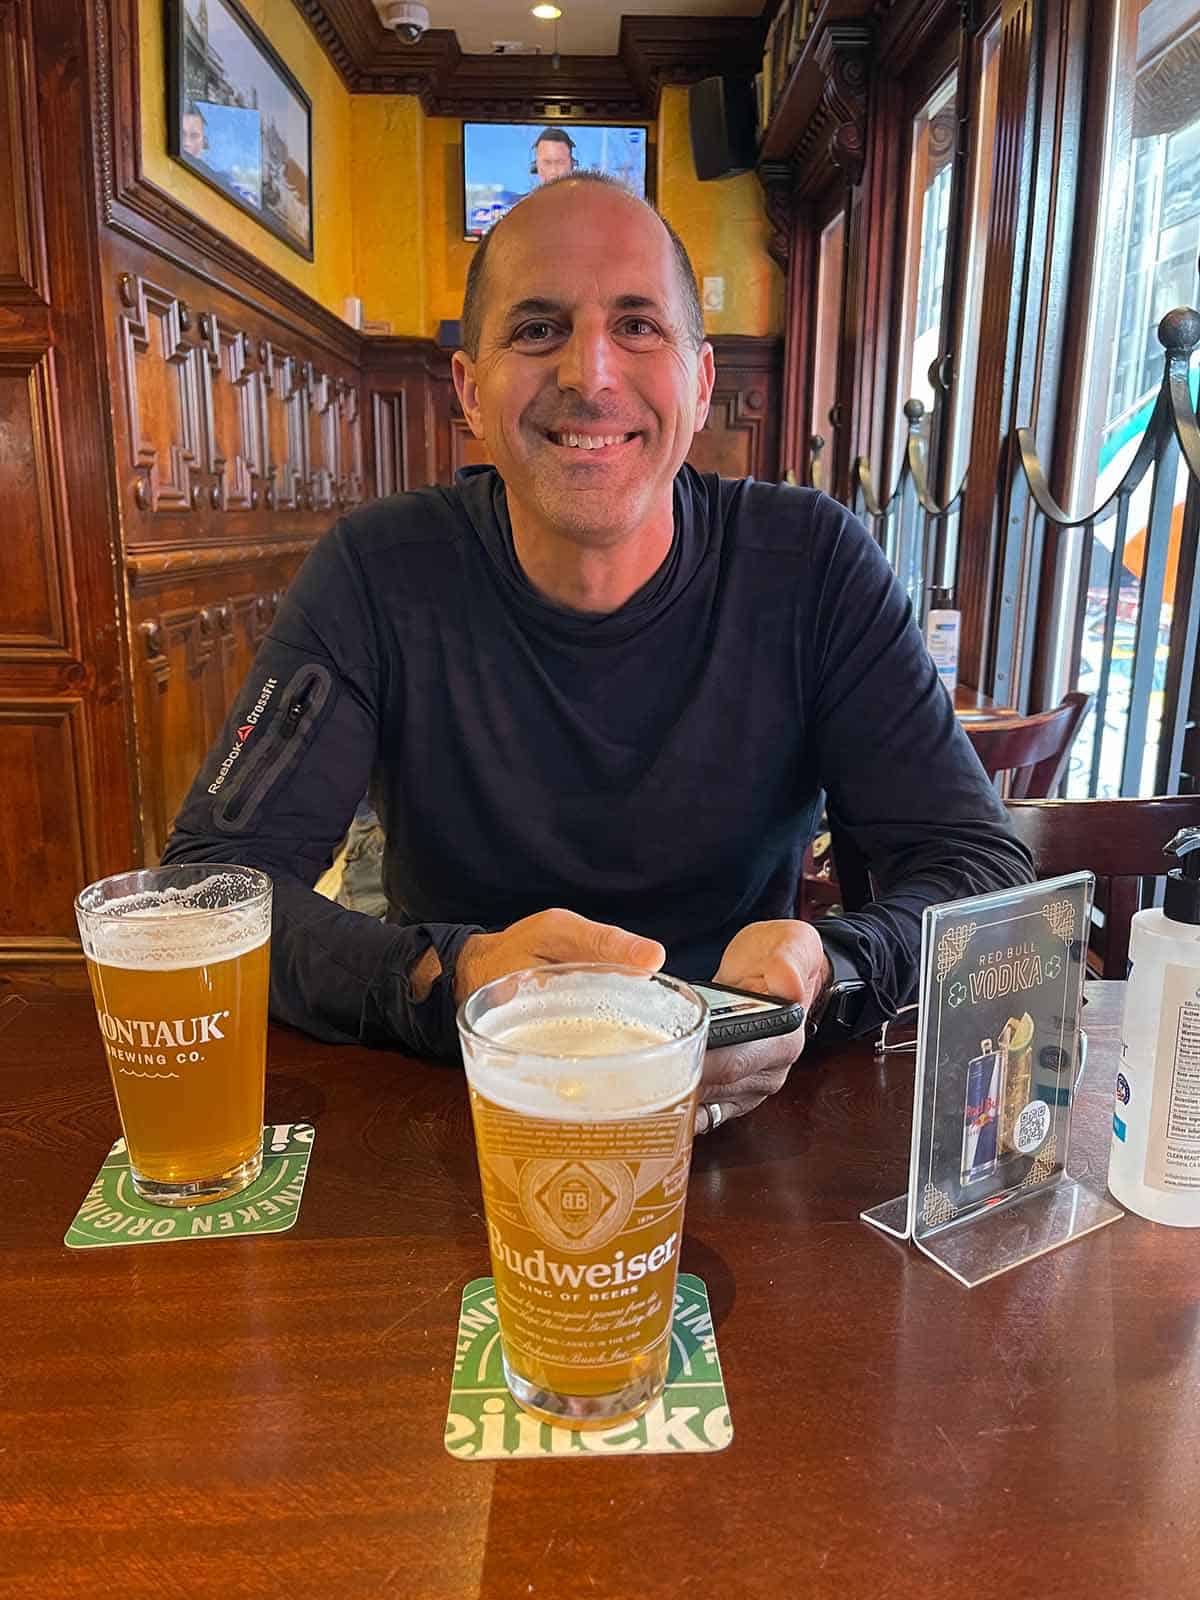 Mike drinking beer at bar.